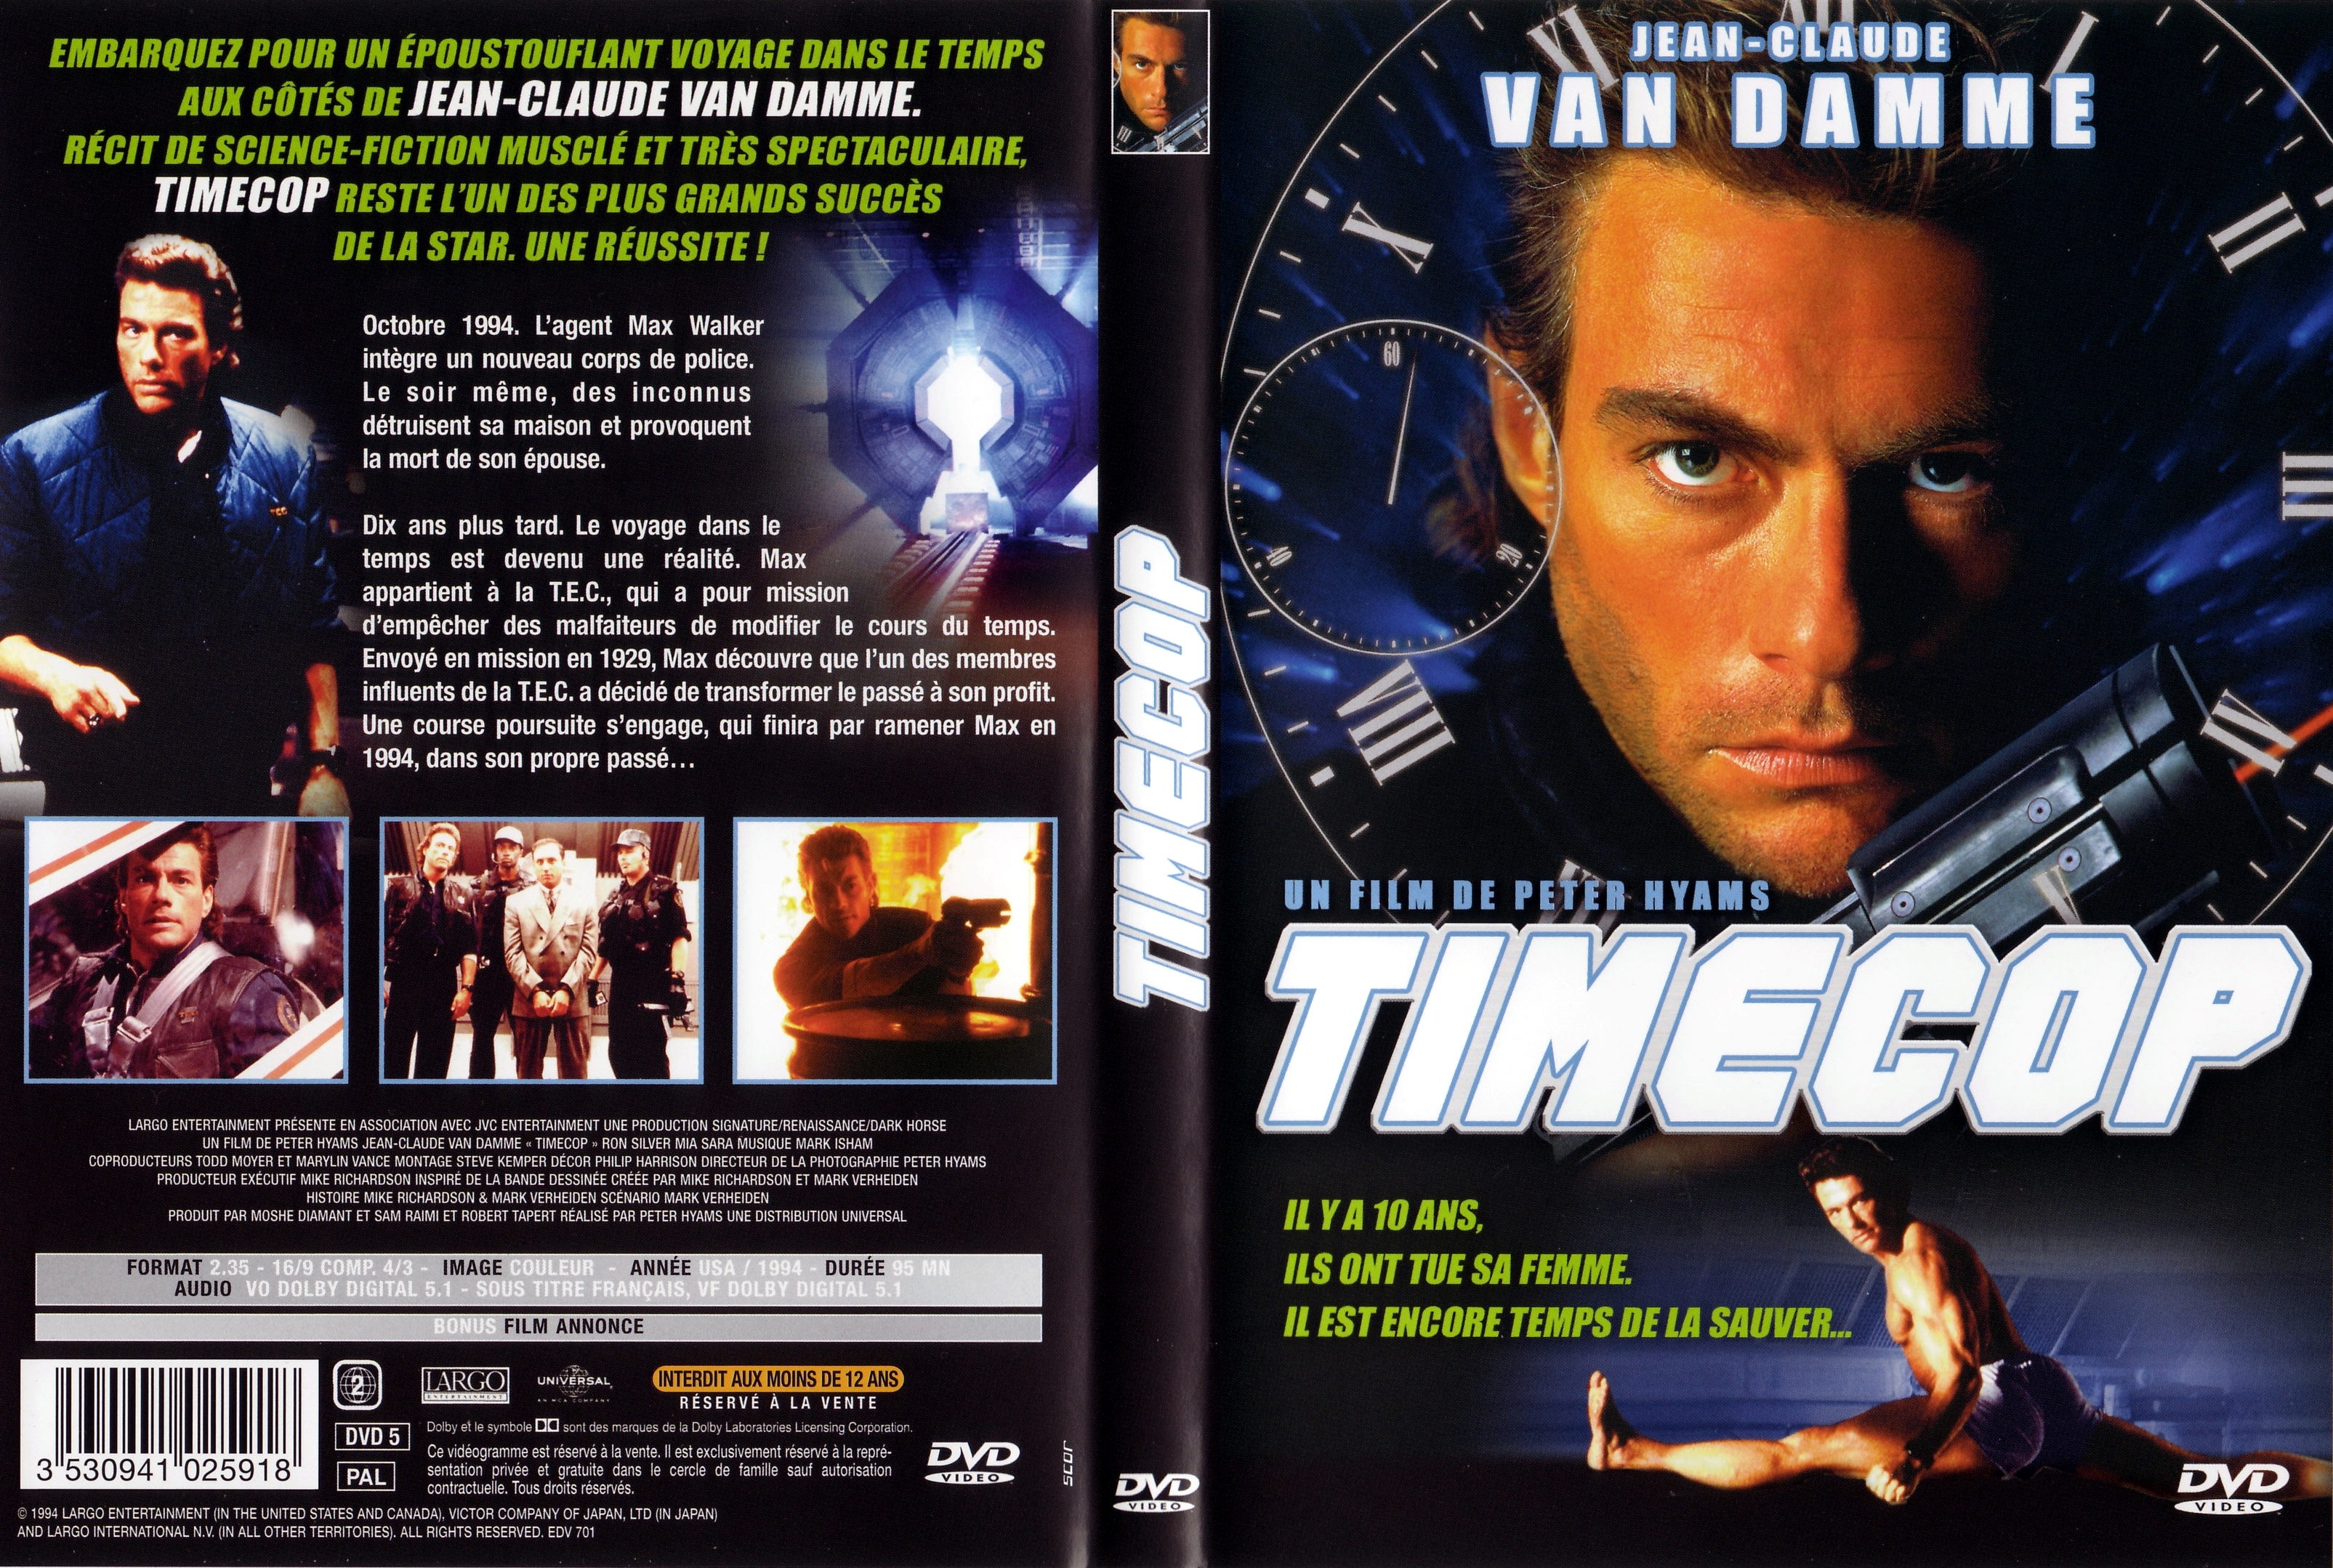 Jaquette DVD Timecop v3